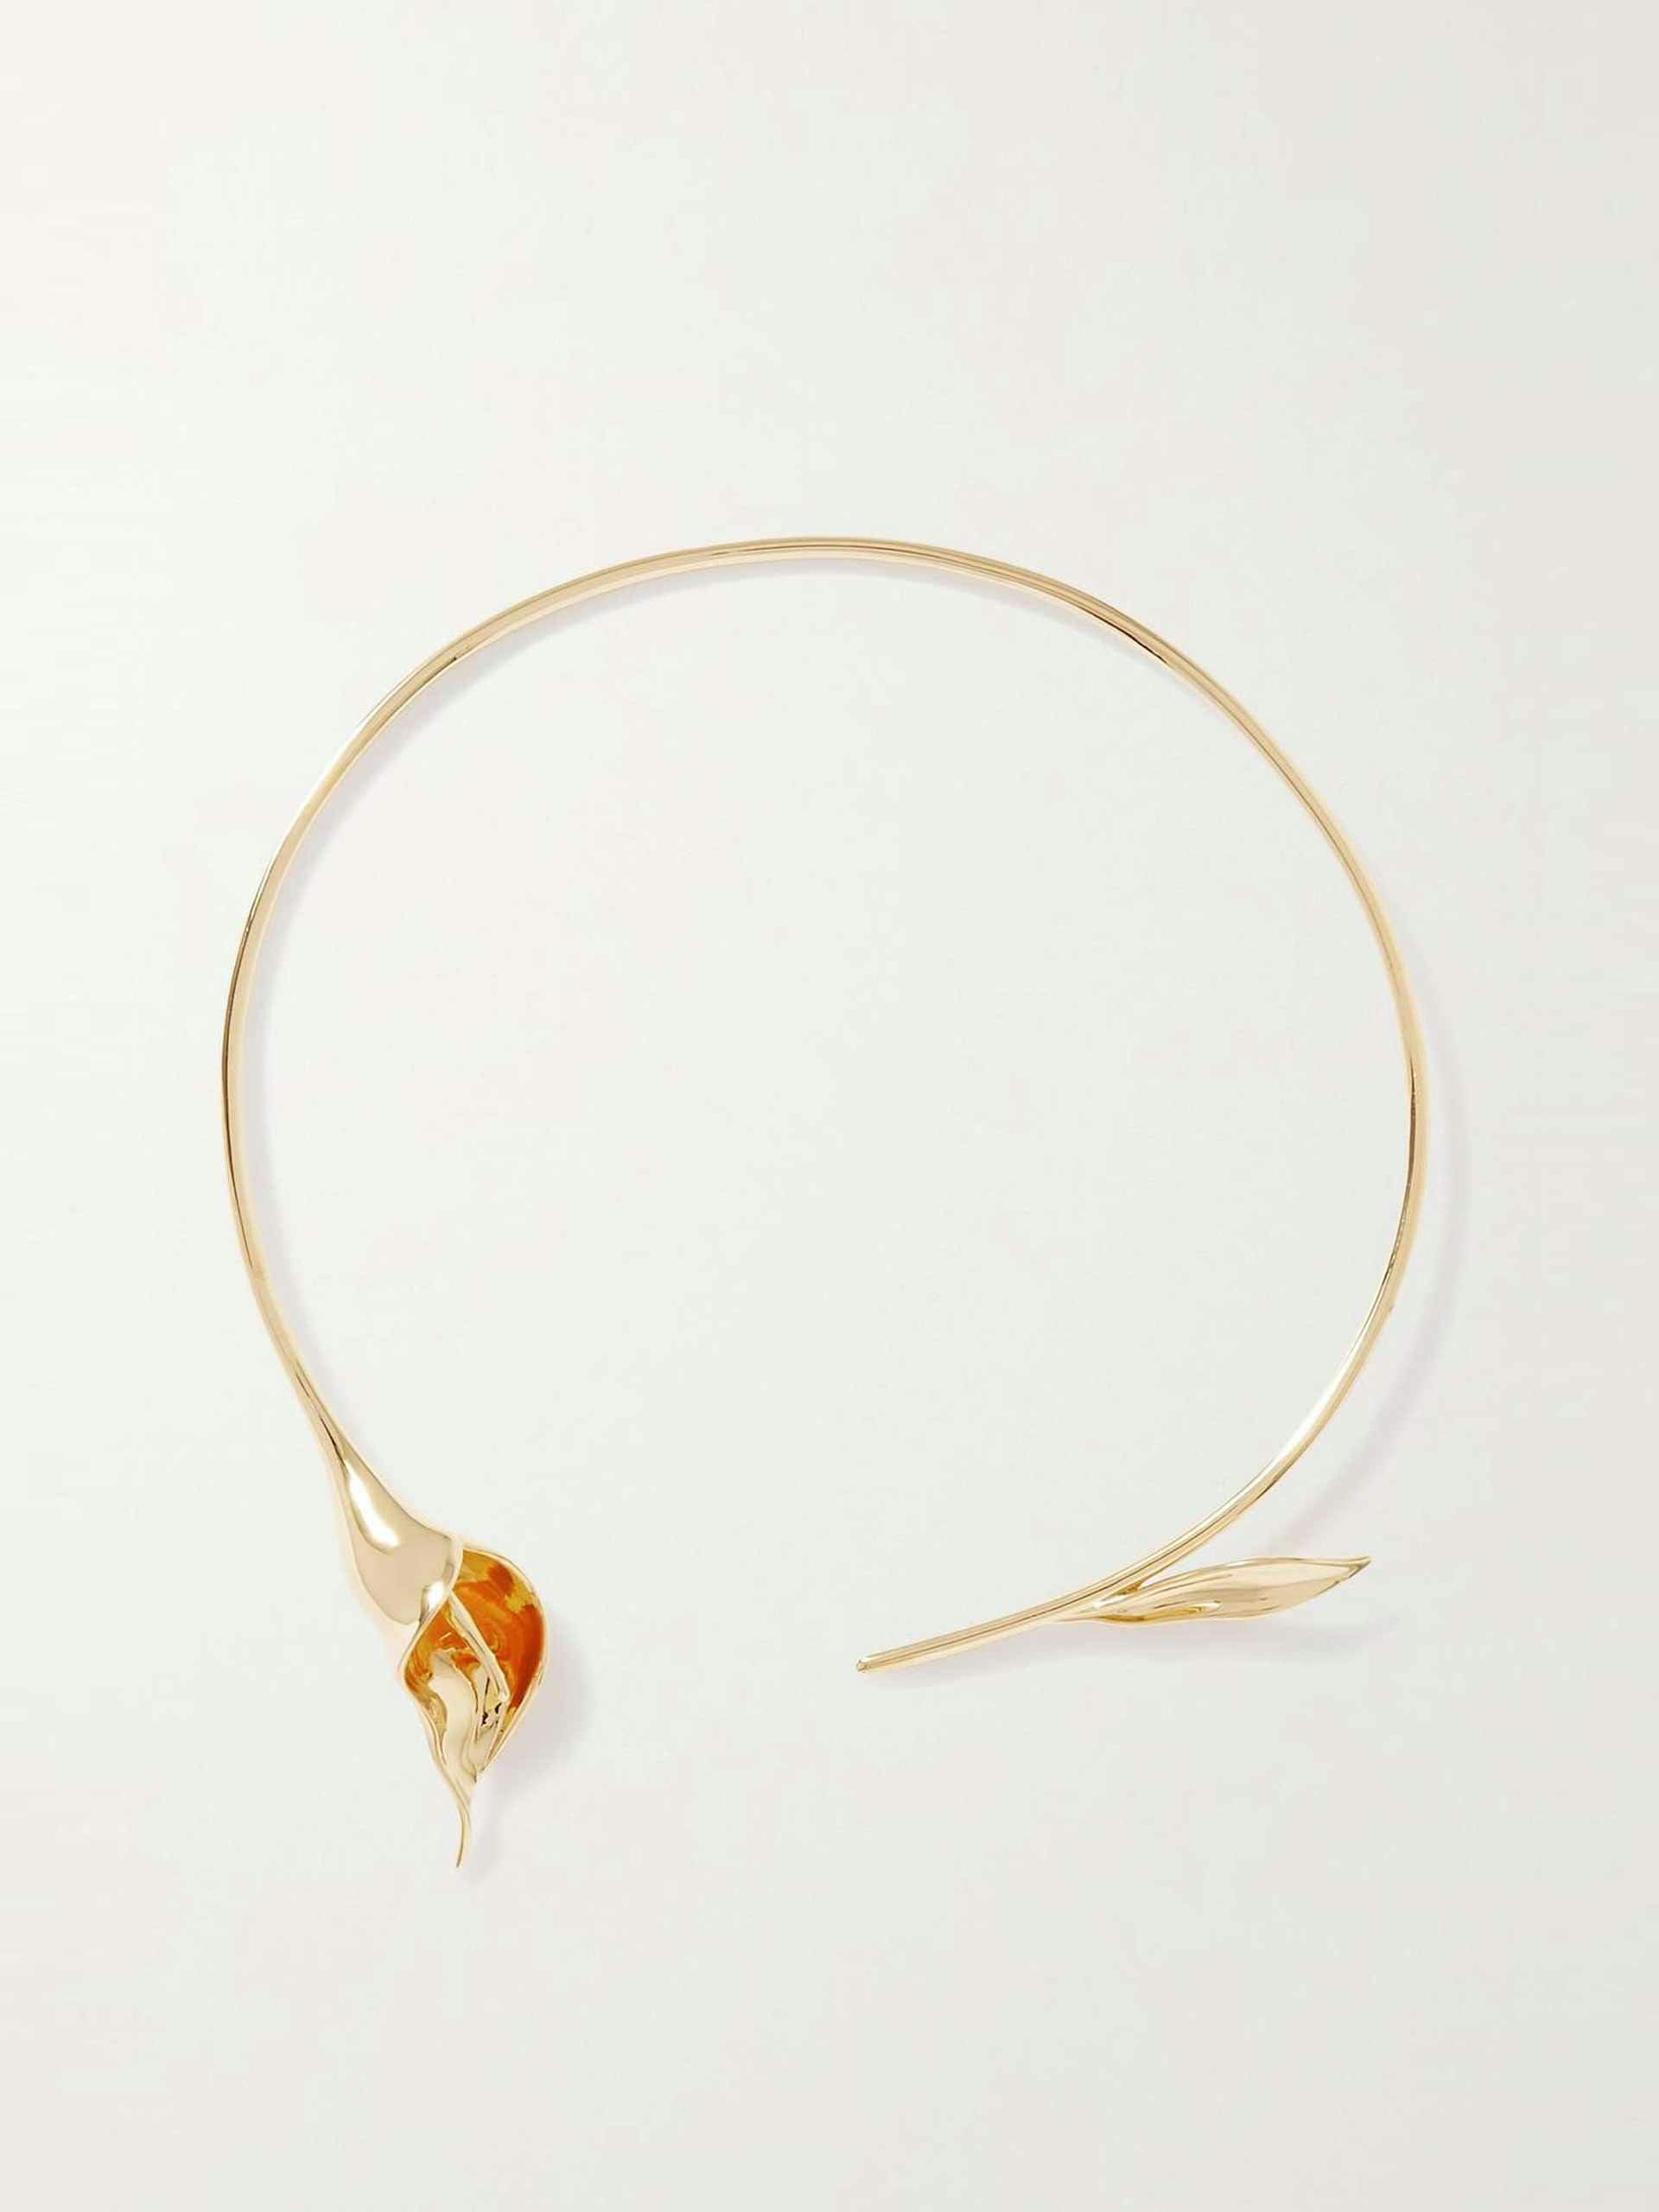 Budding Romance gold-plated necklace